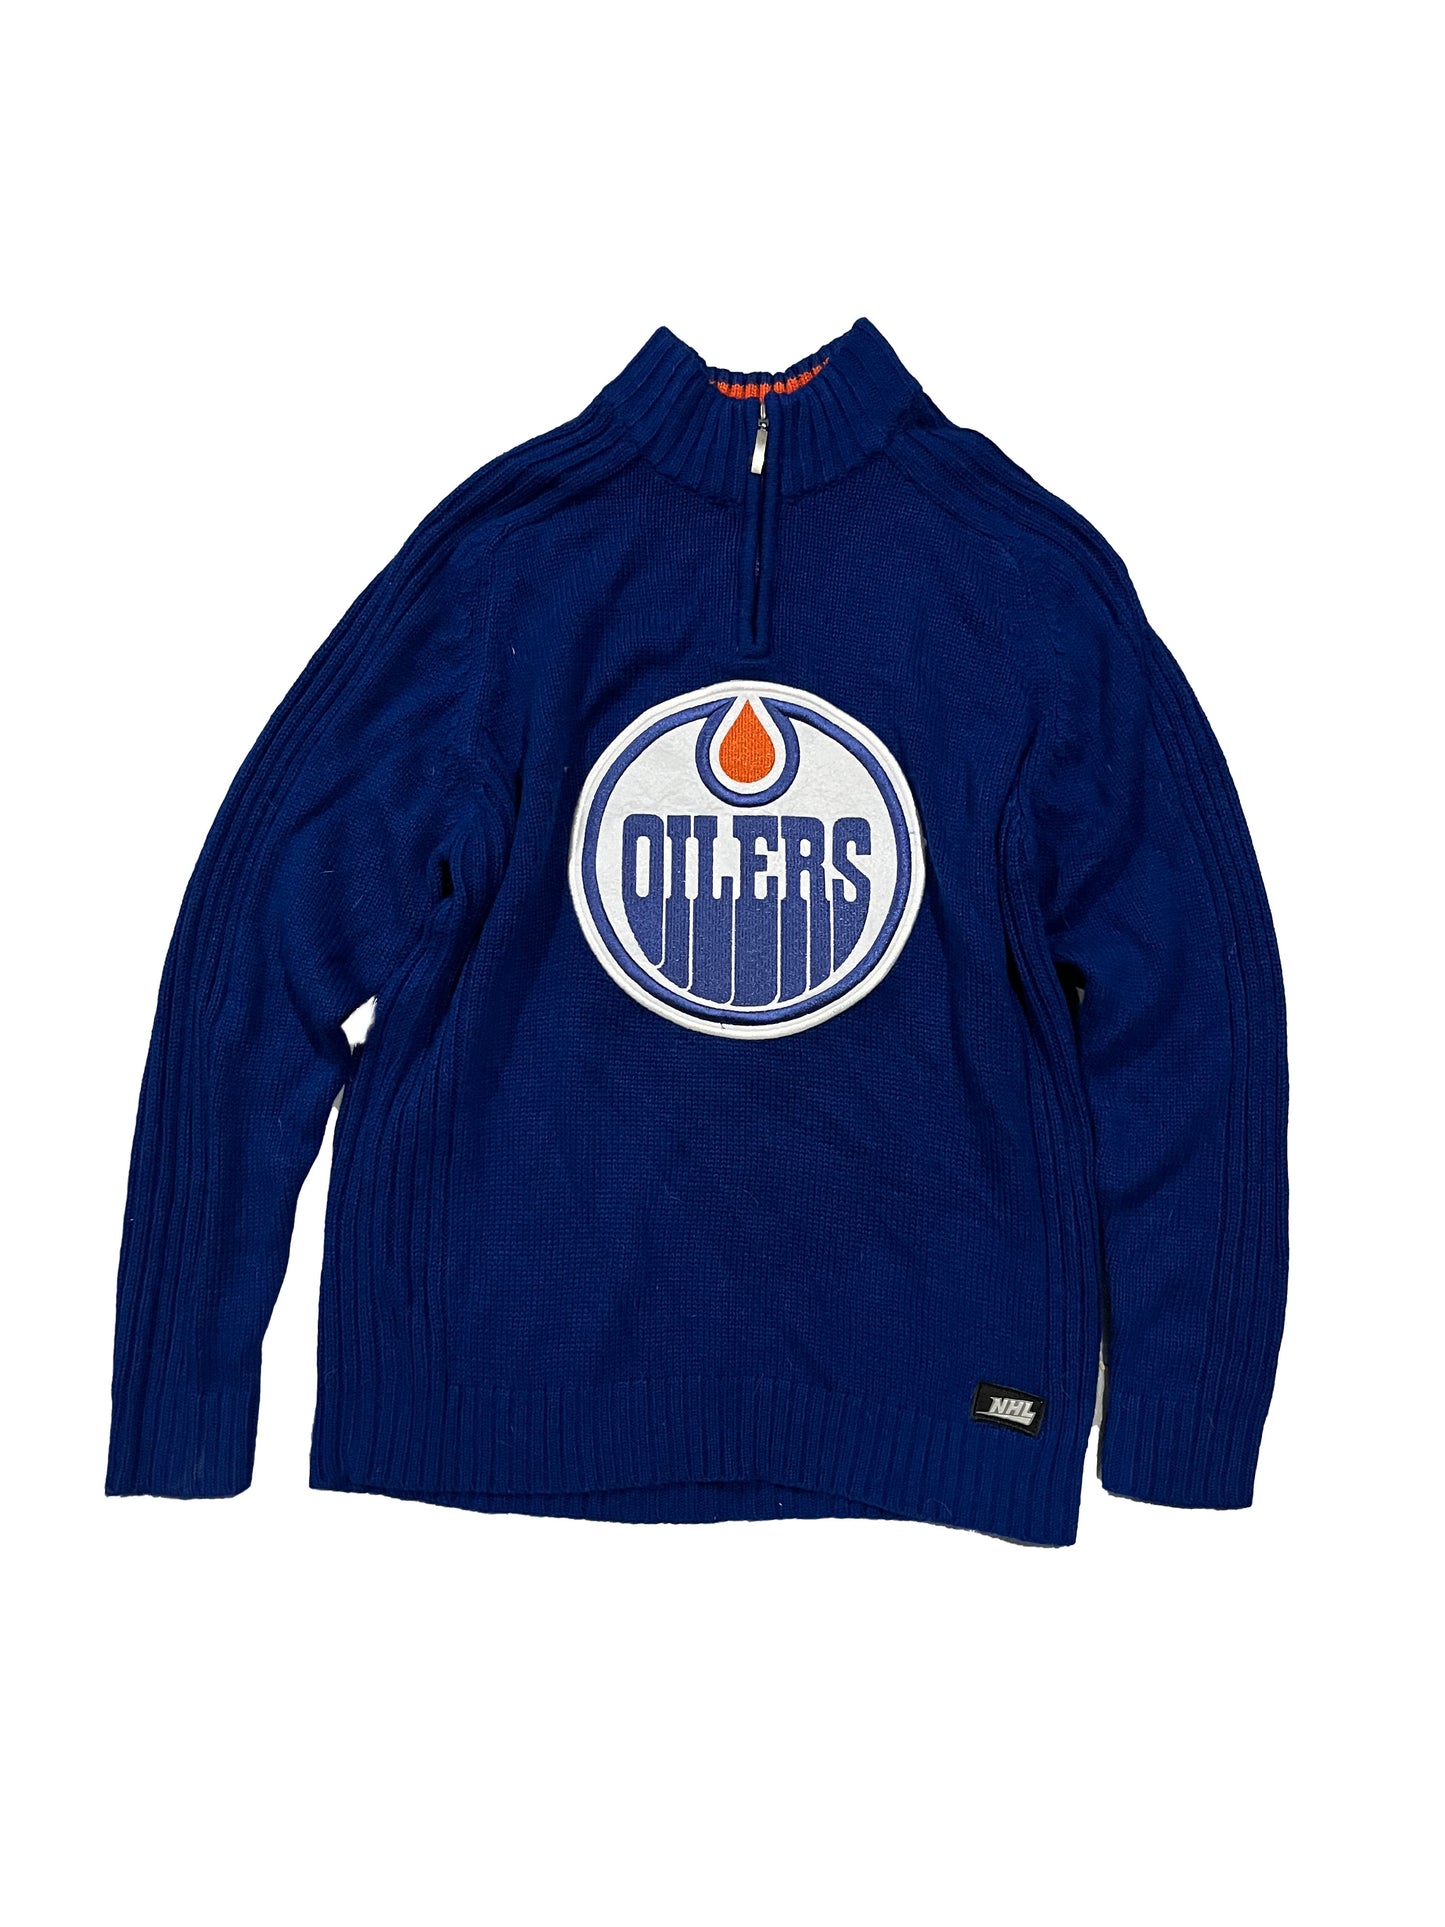 Vintage NHL Edmonton Oilers Knitted Sweater